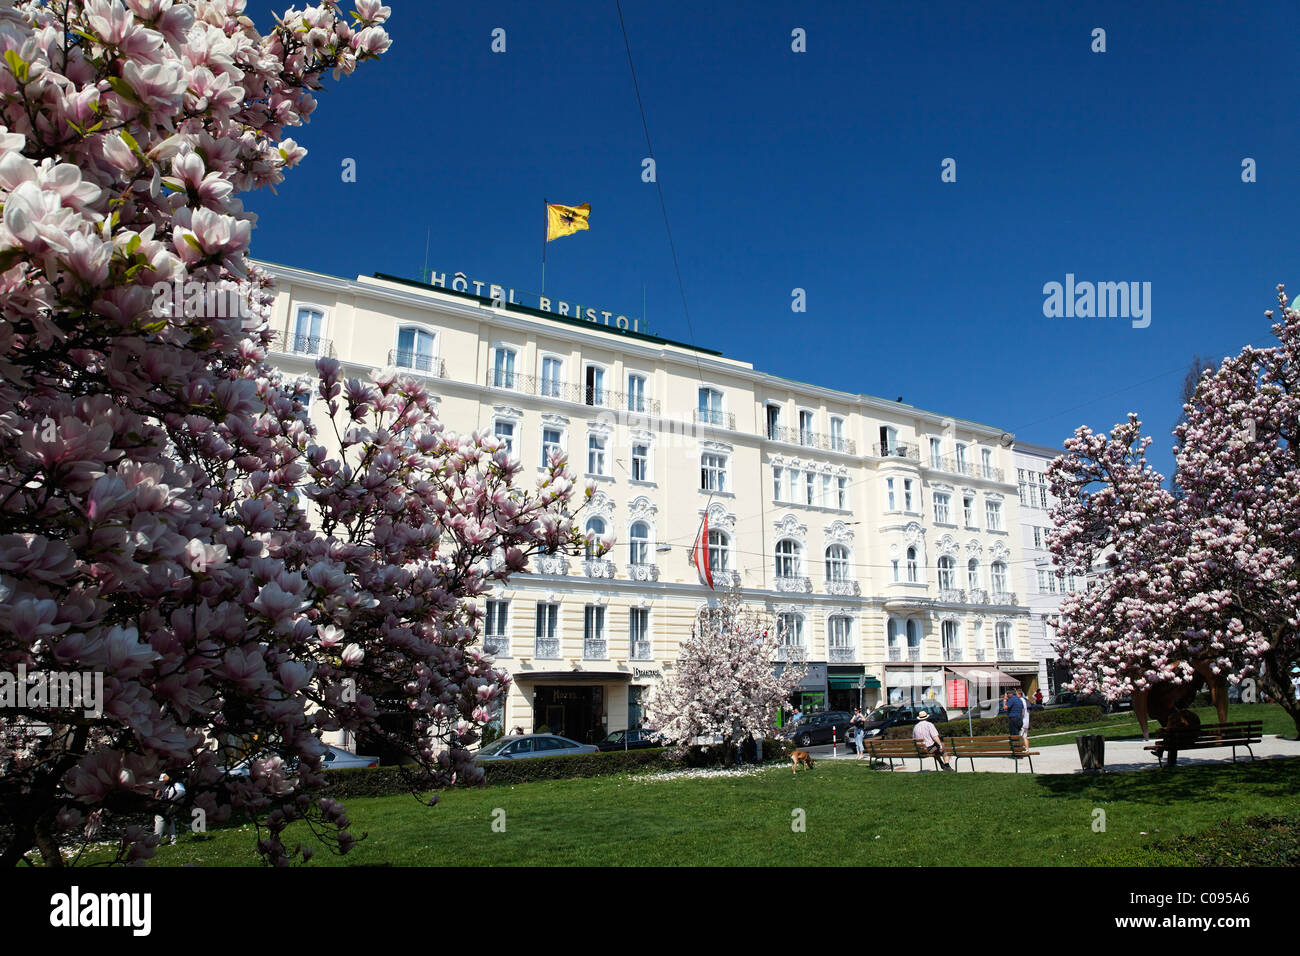 Bristol Hotel and blossoming magnolia trees, Makartplatz Square, Salzburg, historic centre, Salzburger Land, Austria, Europe Stock Photo